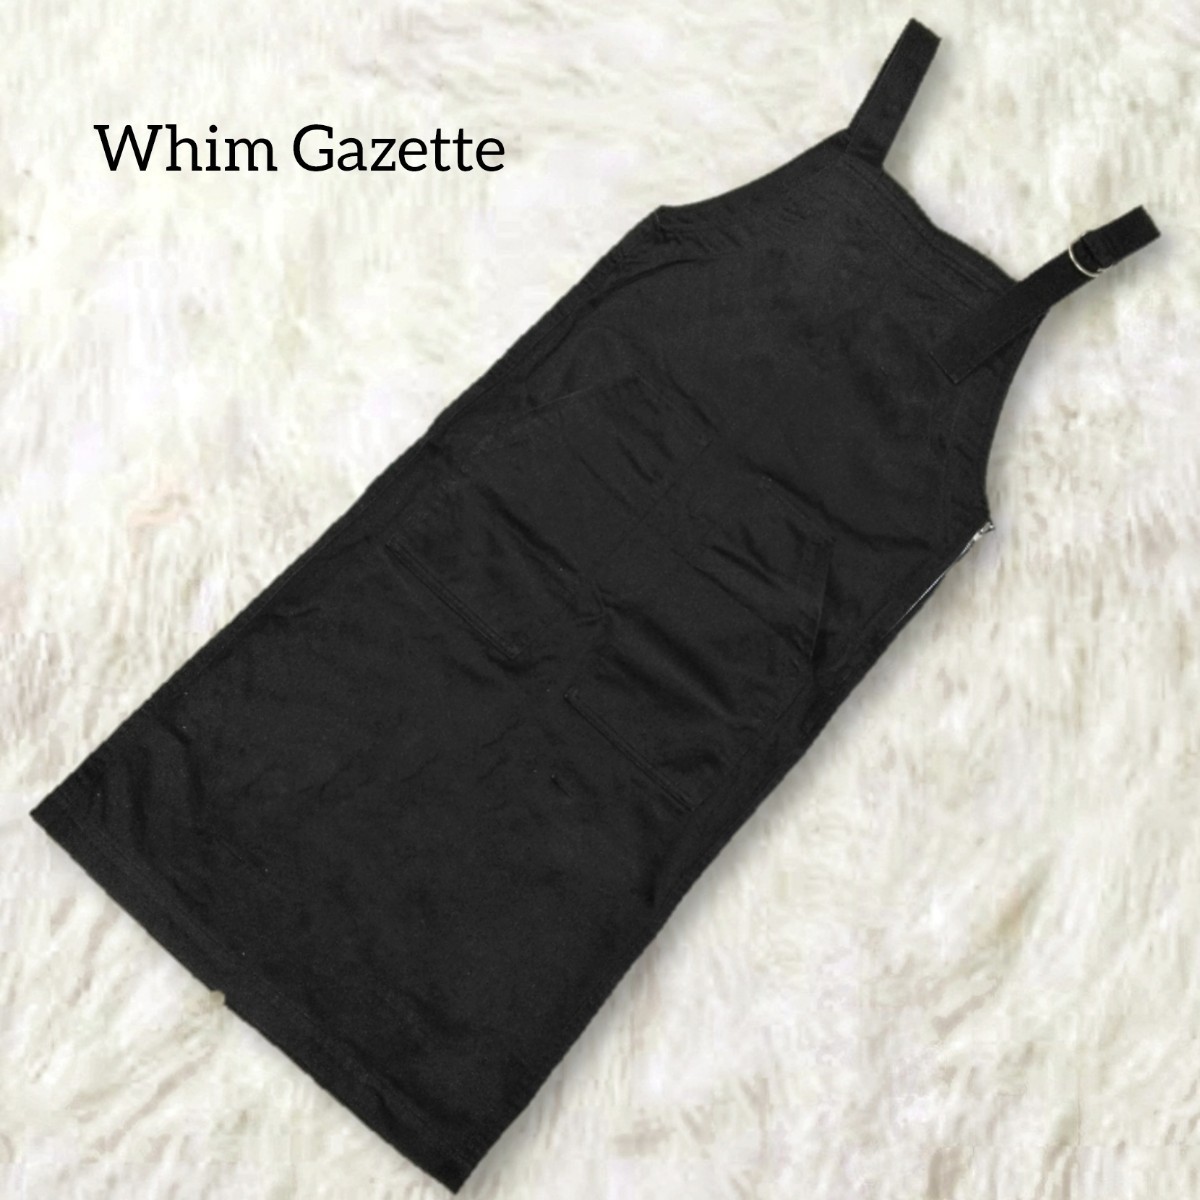 9 【Whim Gazette】 ウィムガゼット ジャンパースカート ロングワンピース F フリーサイズ 黒 ブラック 無地 大人可愛い レディース